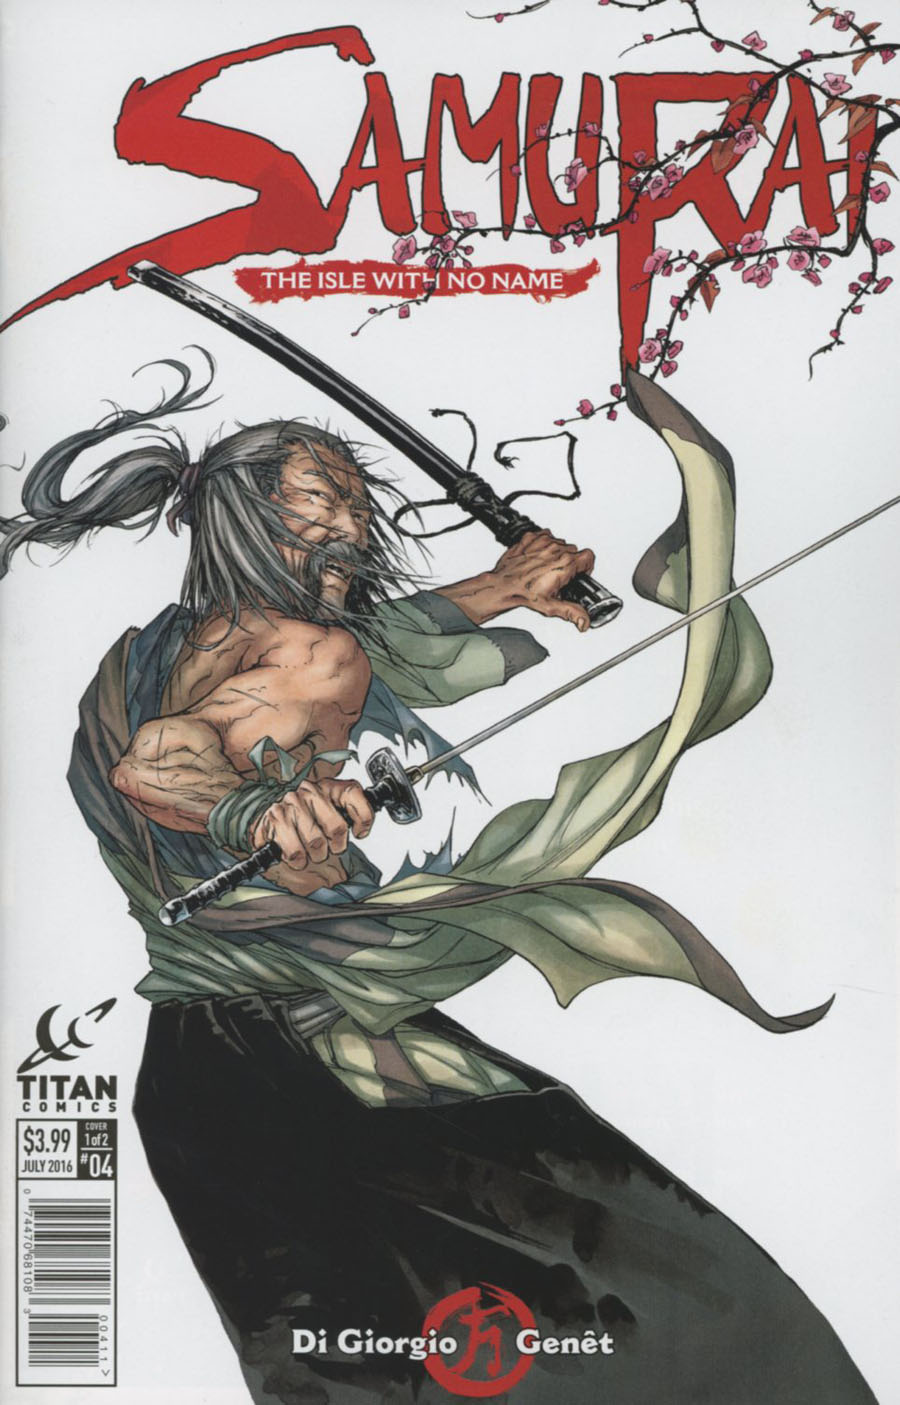 Samurai (Titan Comics) #4 Cover A Regular Frederic Genet Cover